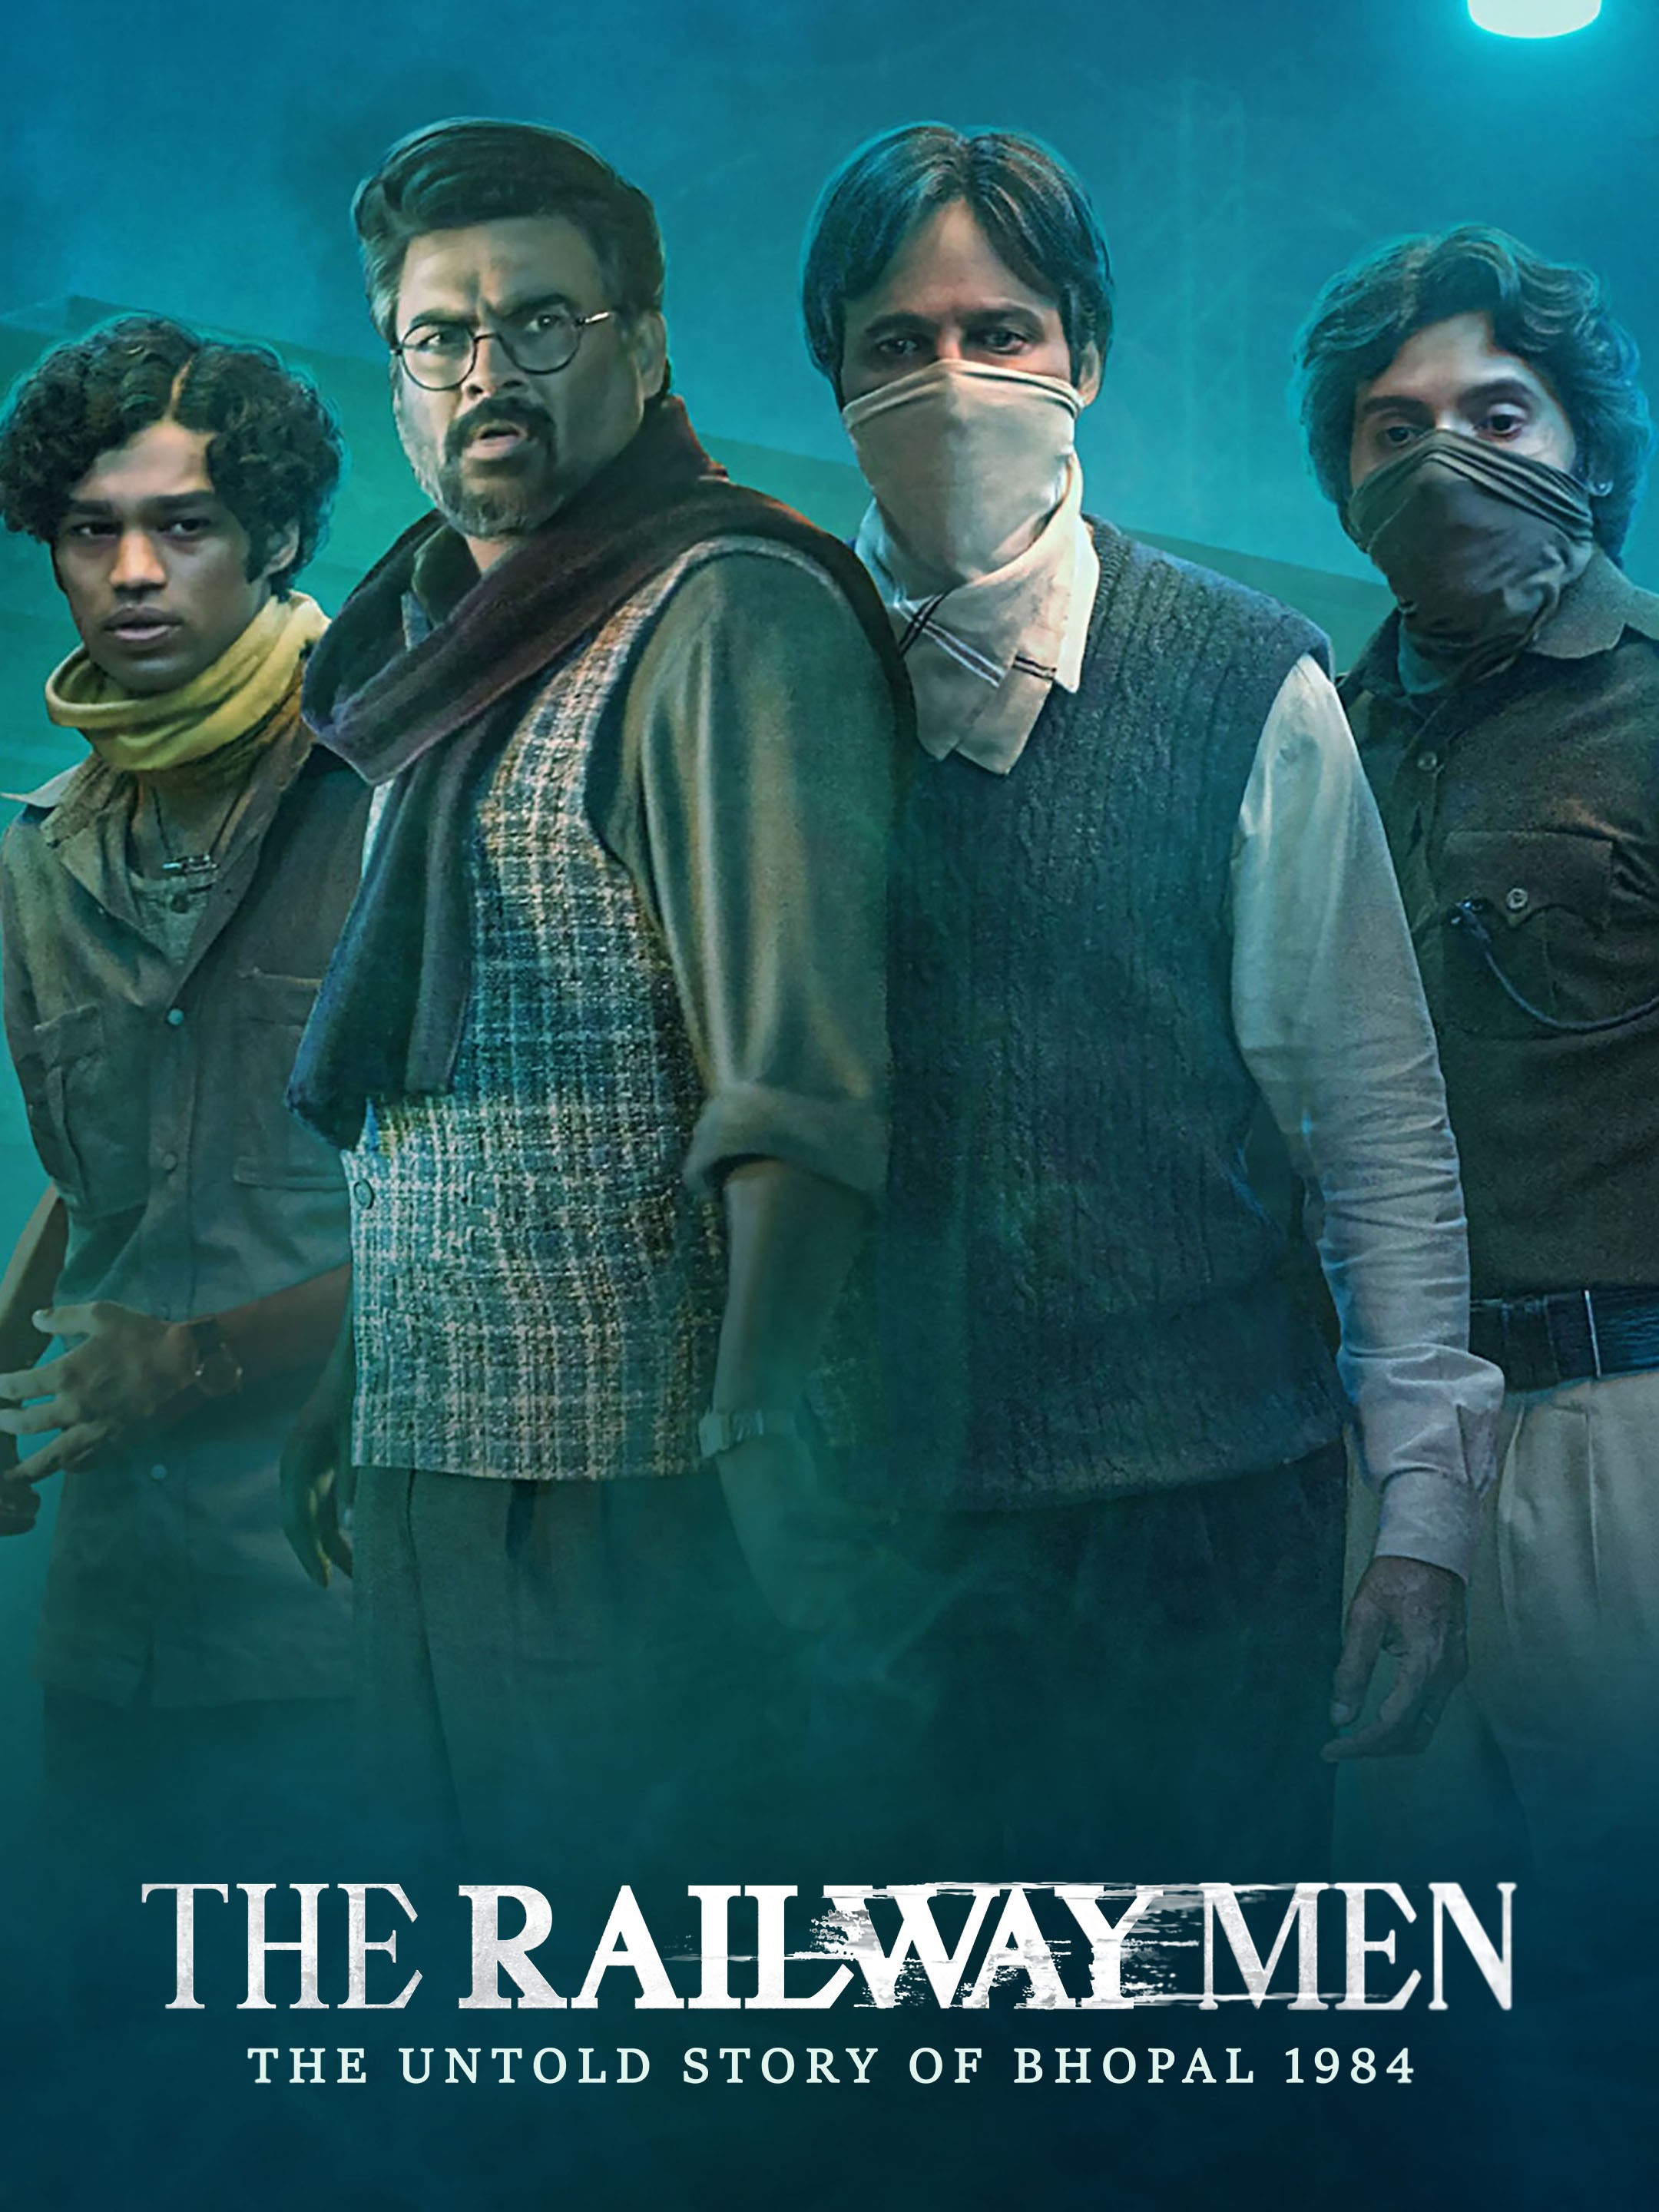 Image of The Railway Men movie poster